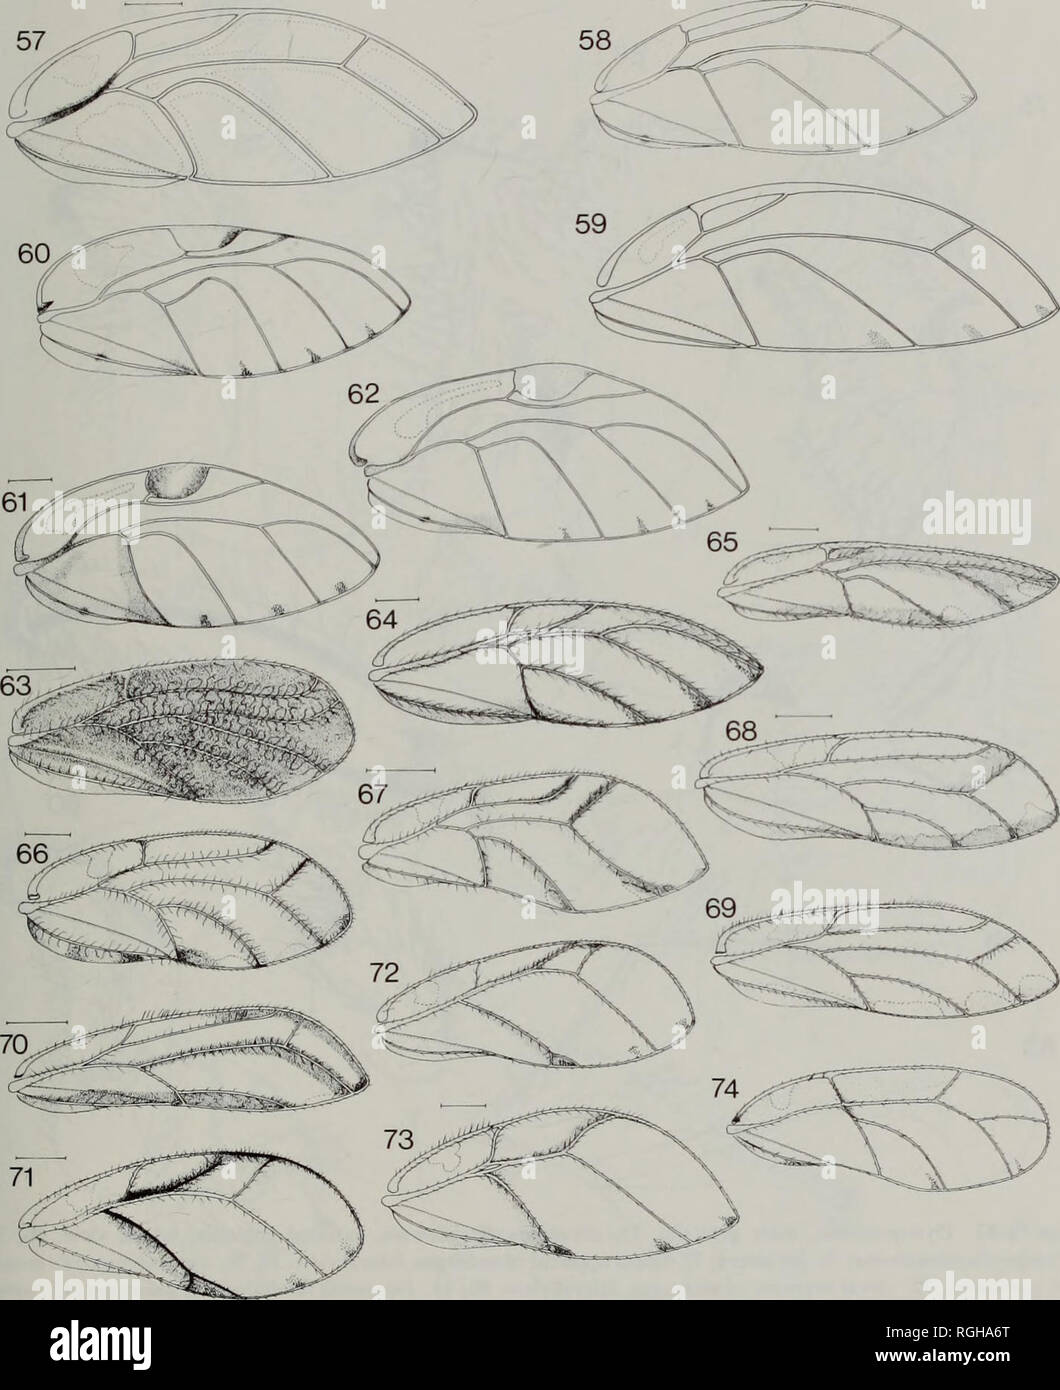 . Bulletin des British Museum (Natural History) Entomologie. F/Ct/5-FÜTTERUNG PSYLLIDS 175. Feigen 57-74 Macrohomotominae und Homotominae, Vorderflügel. 57, Mycopsylla gardenensis. 58, M. obliqua. 59, M. propinqua. 60, Macrohomotoma gladiata. 61, Pseudoeriopsylla loingi. 62, S. etiennei. 63. Angolensis Homotoma. 64, H. Pacifica. 65, Homotoma sp., in der Nähe von Pacifica. 66, H. Ficus. 67, H. bamendae. 68, 69, H.; chlamydodora 68, Muster aus Burundi; 69, Muster aus Tansania. 70, H. eastopi. 71, H. boheae. 72, H. radiata. 73, //. Bakeri. 74, Synoza cornutiventris. Skala: 0,5 mm. Setosity nicht angezeigt Stockfoto